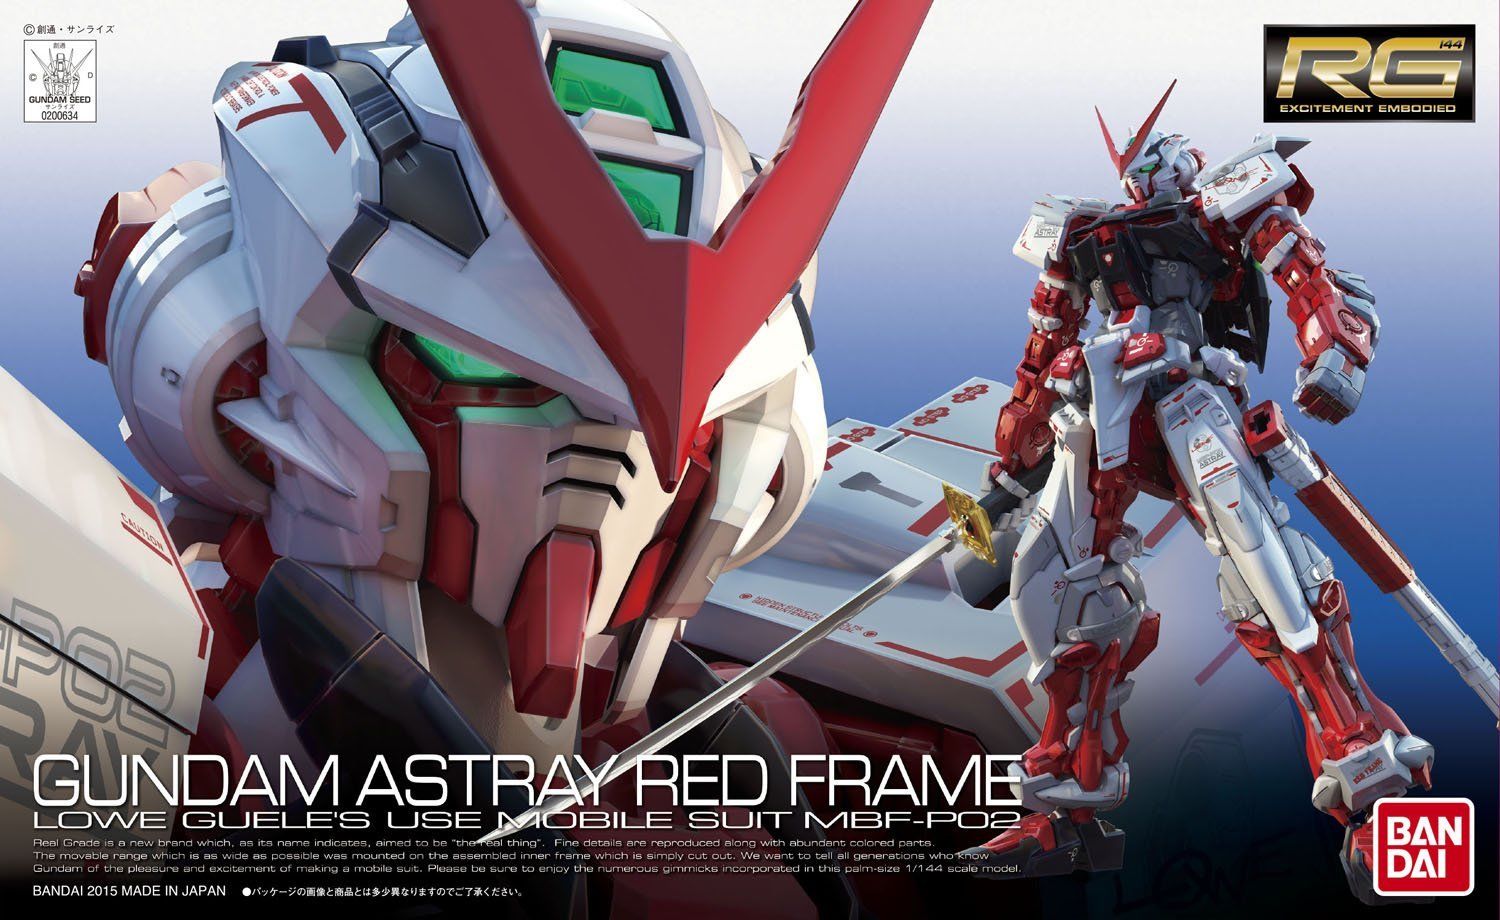 Bandai 1/144 Scale RG MBF-P02 Gundam Astray Red Frame Model Kit